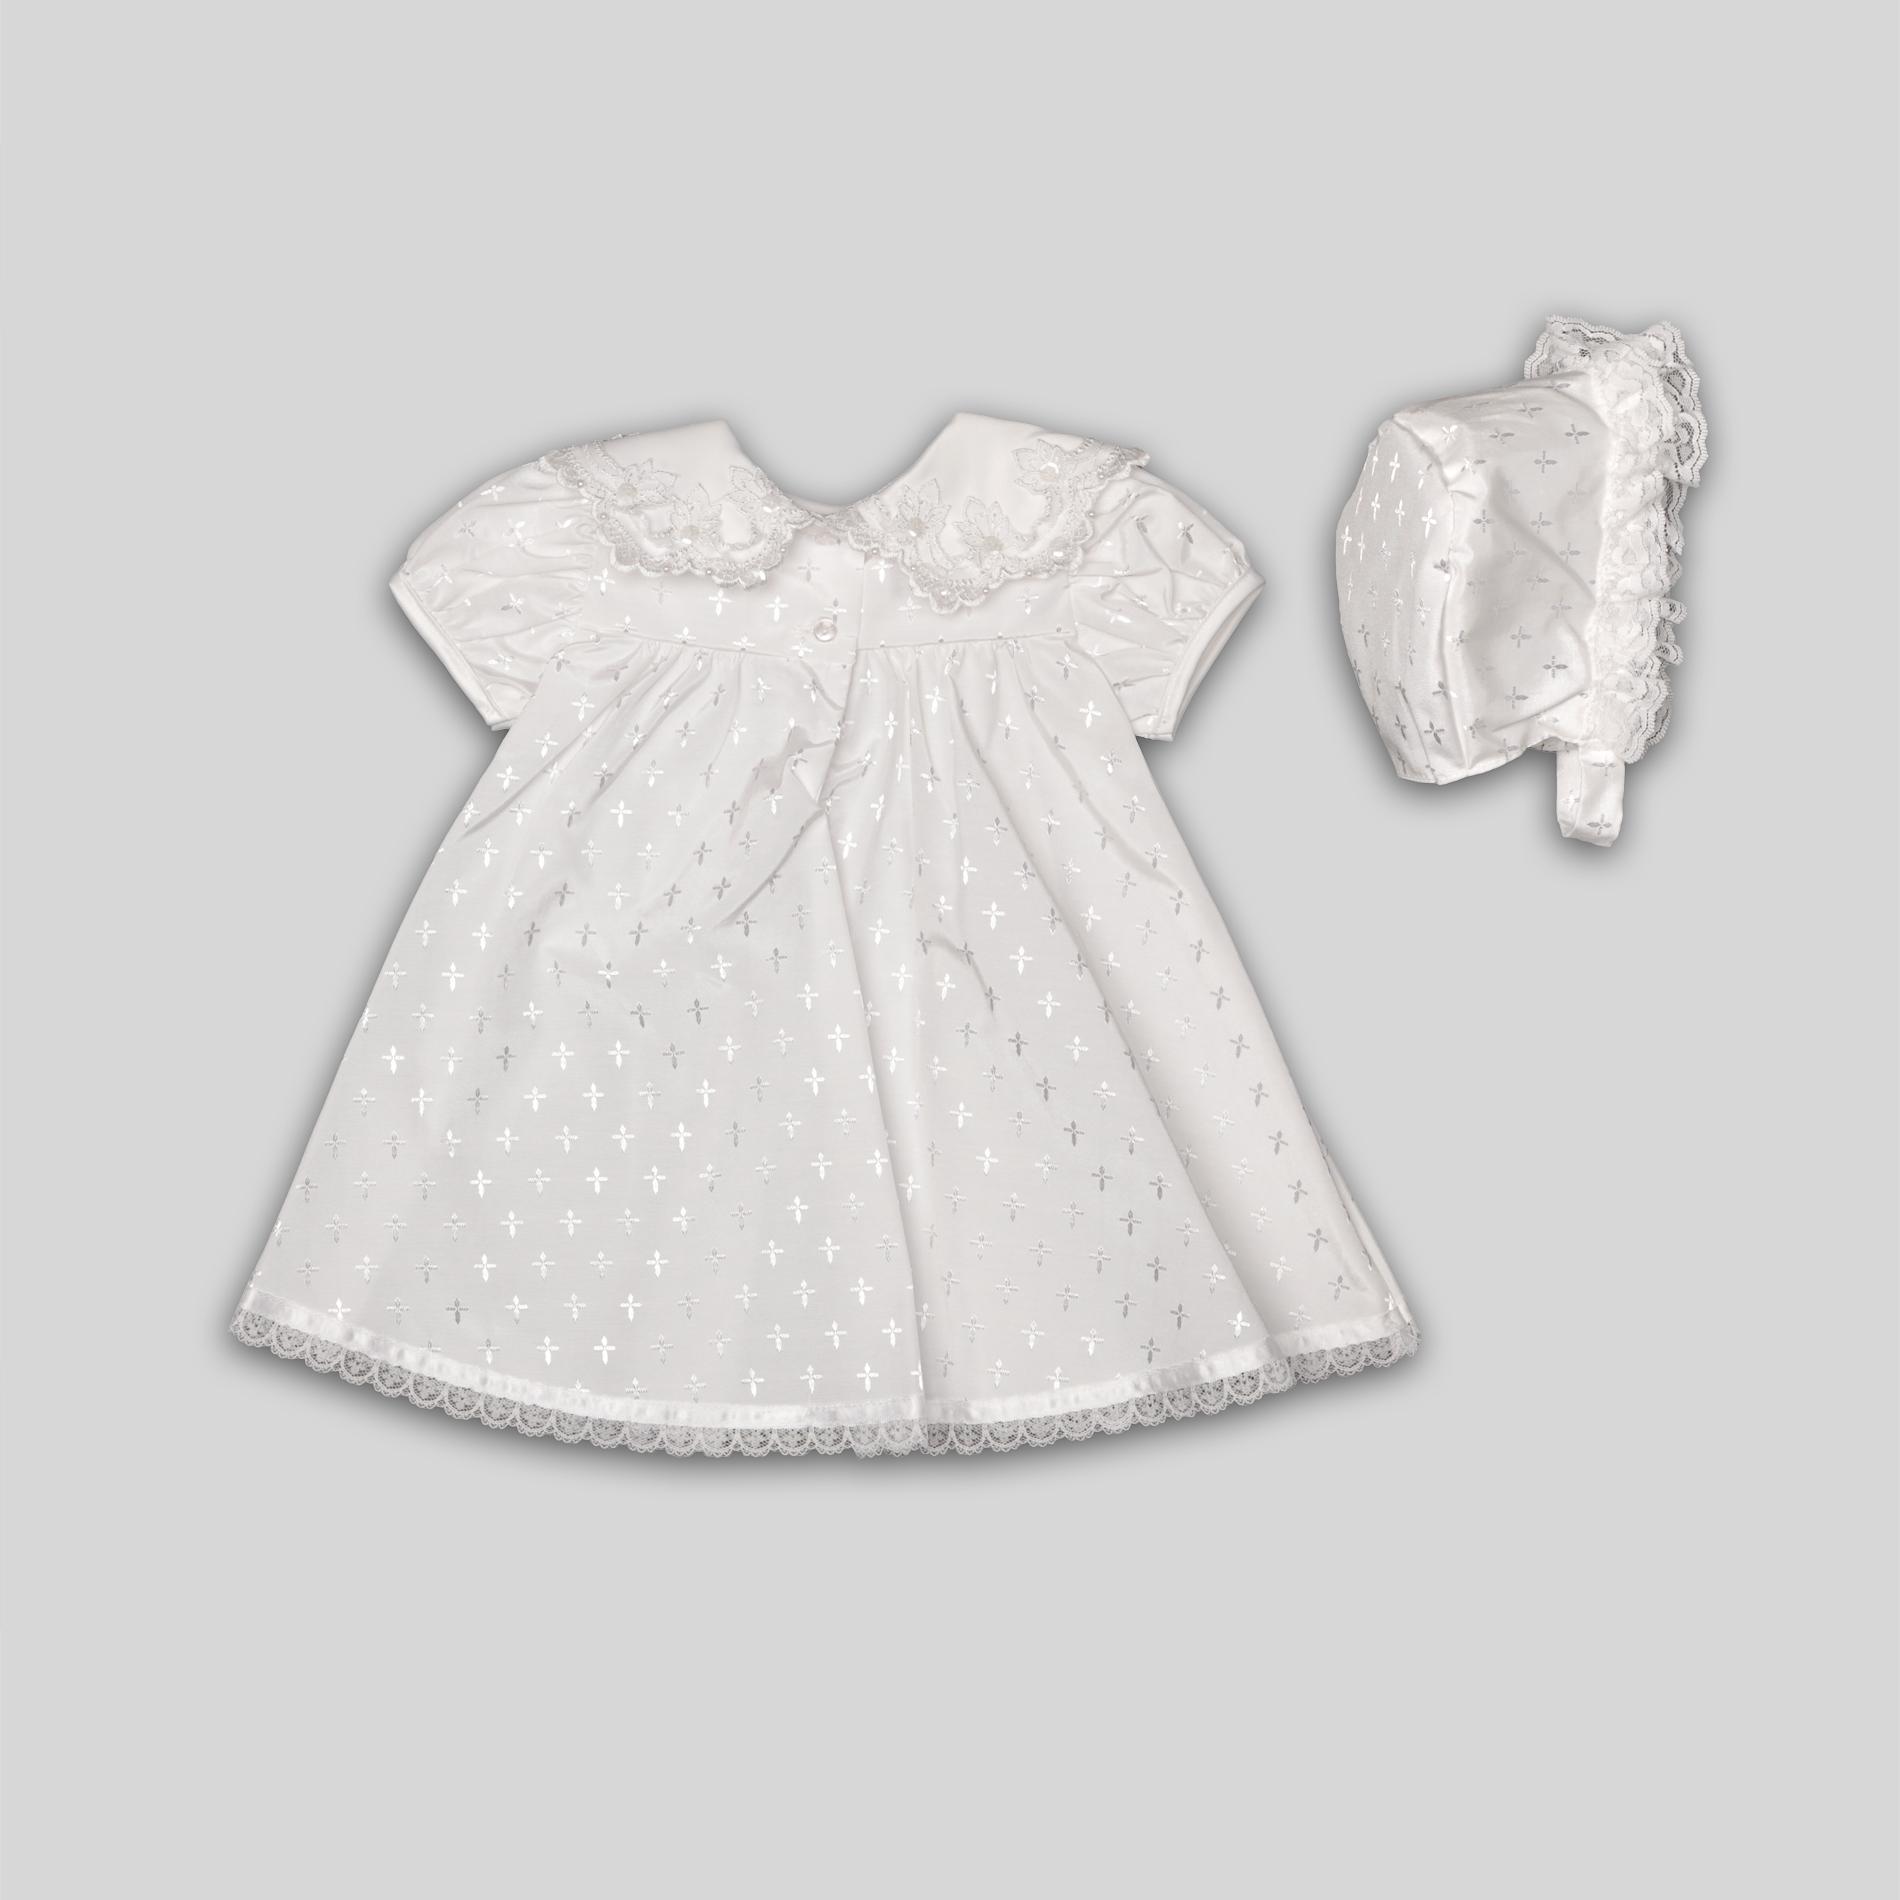 MaDonna Infant Girl's Christening Dress & Bonnet